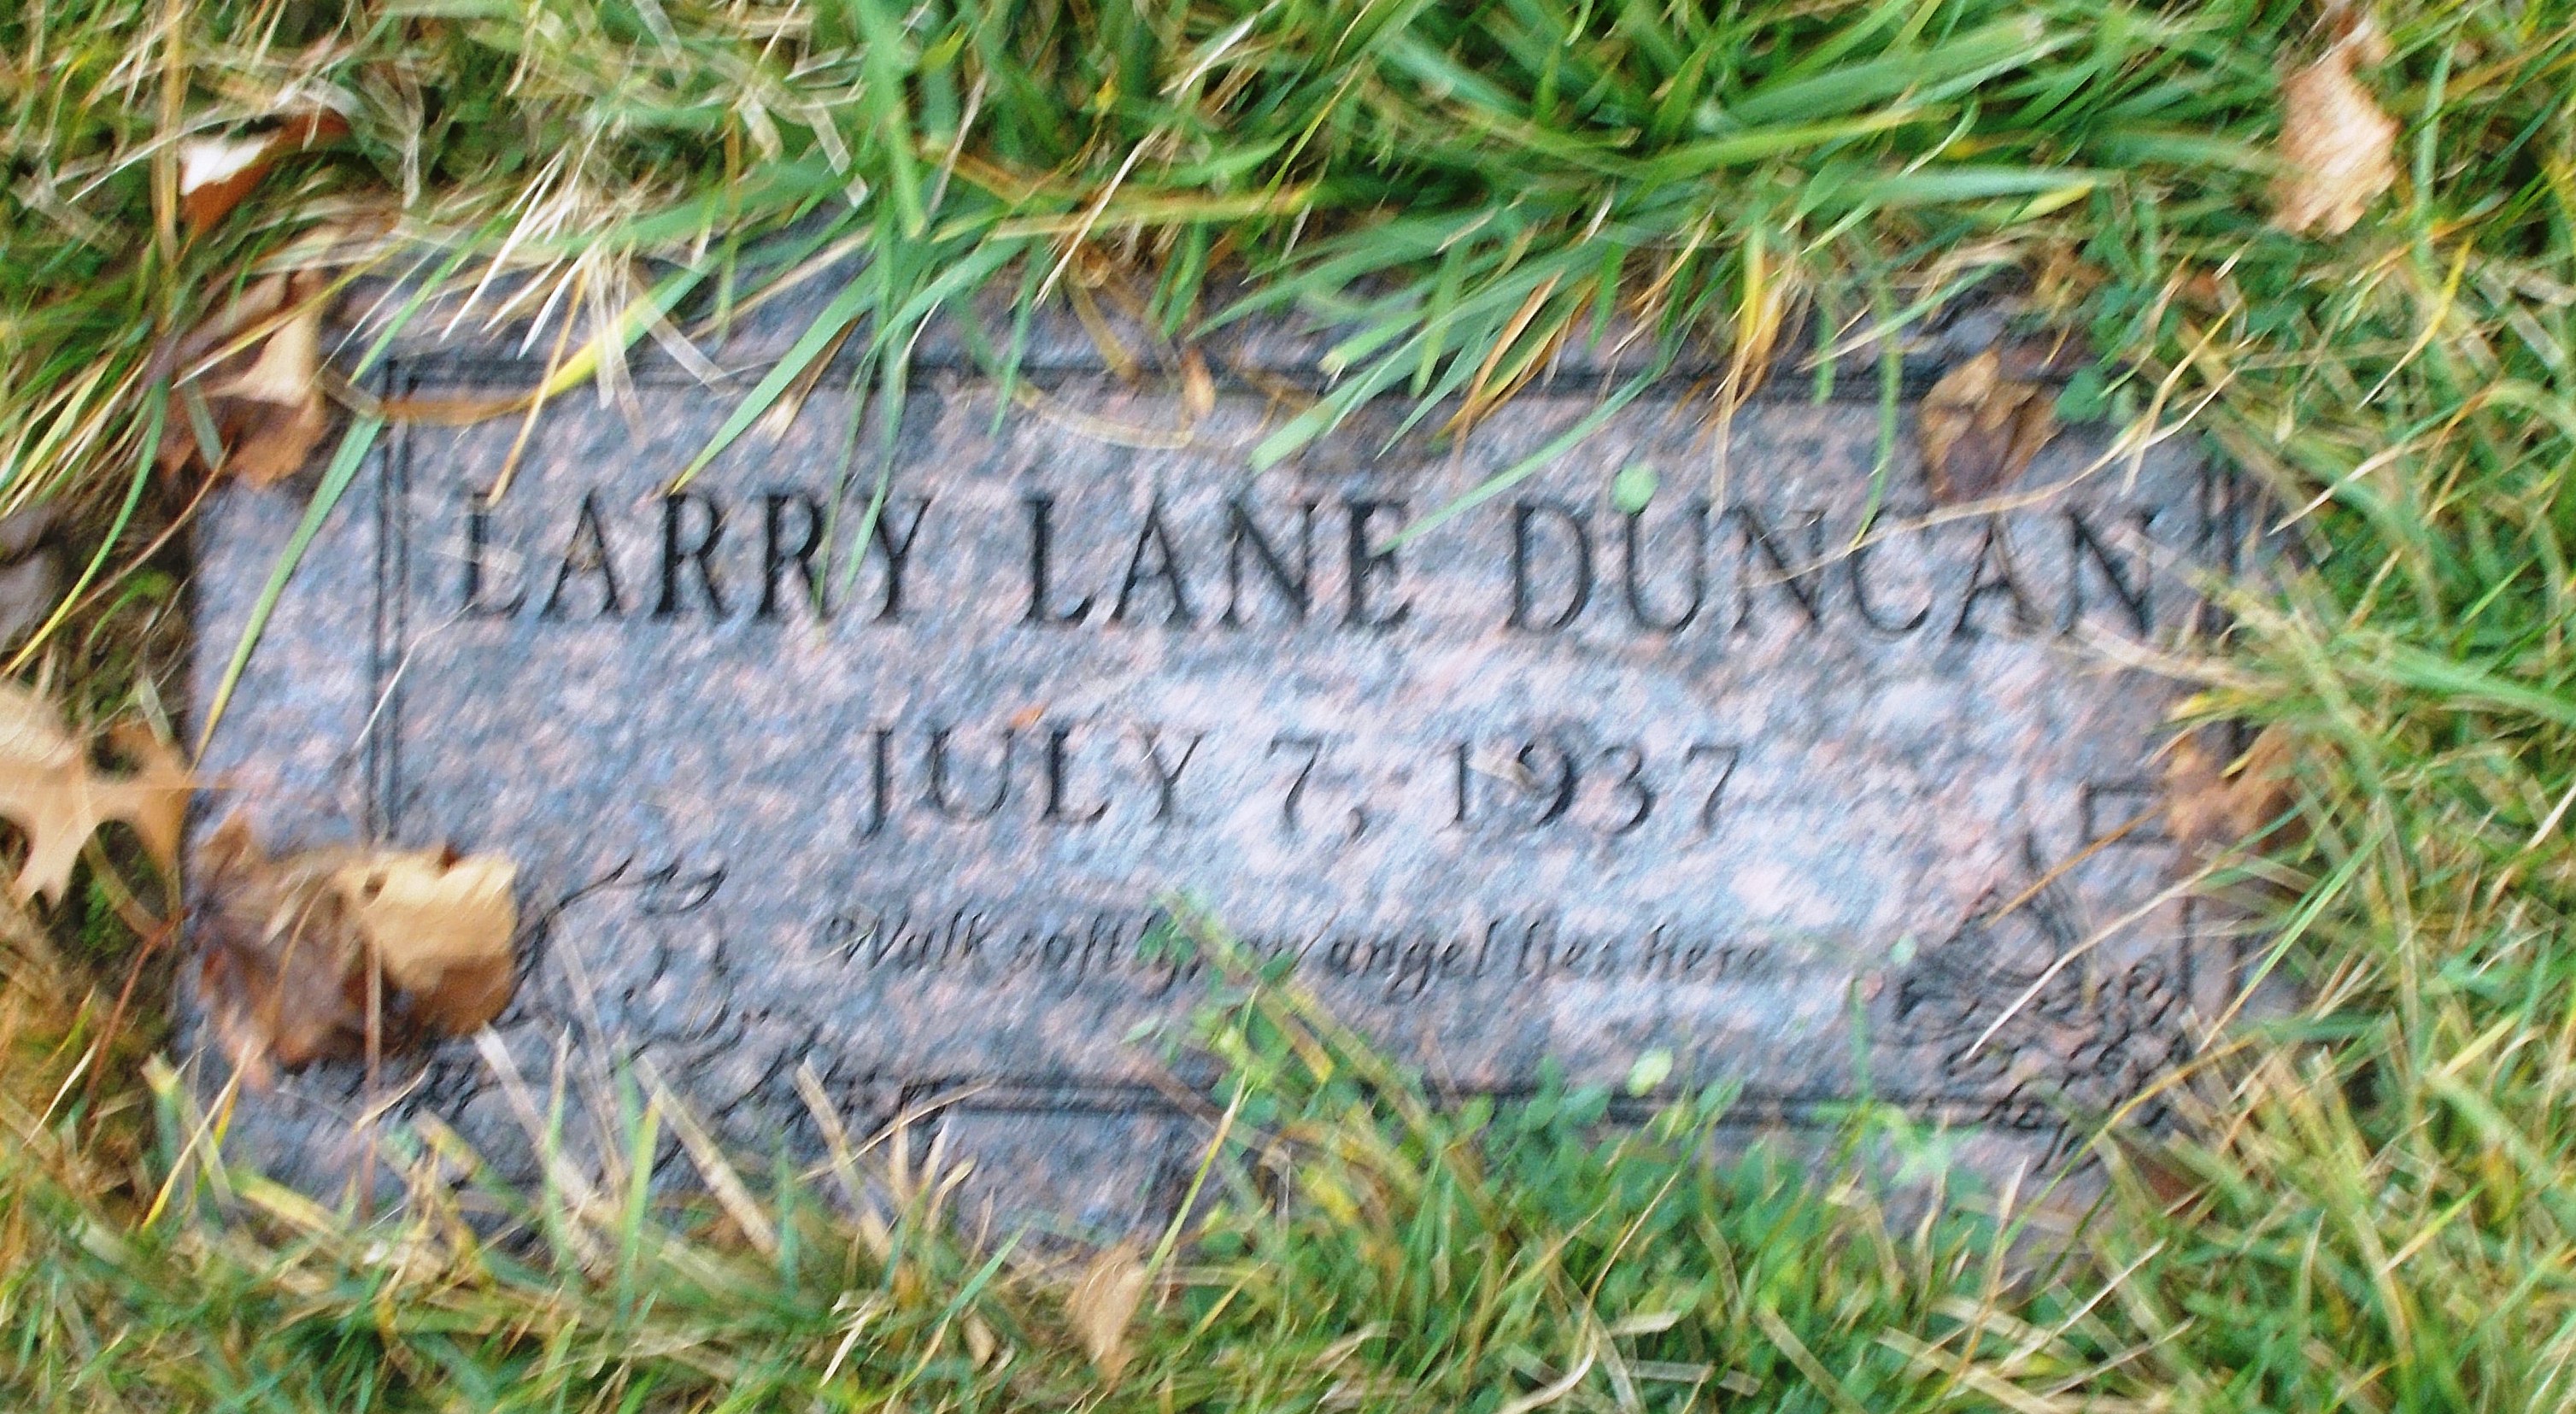 Larry Lane Duncan